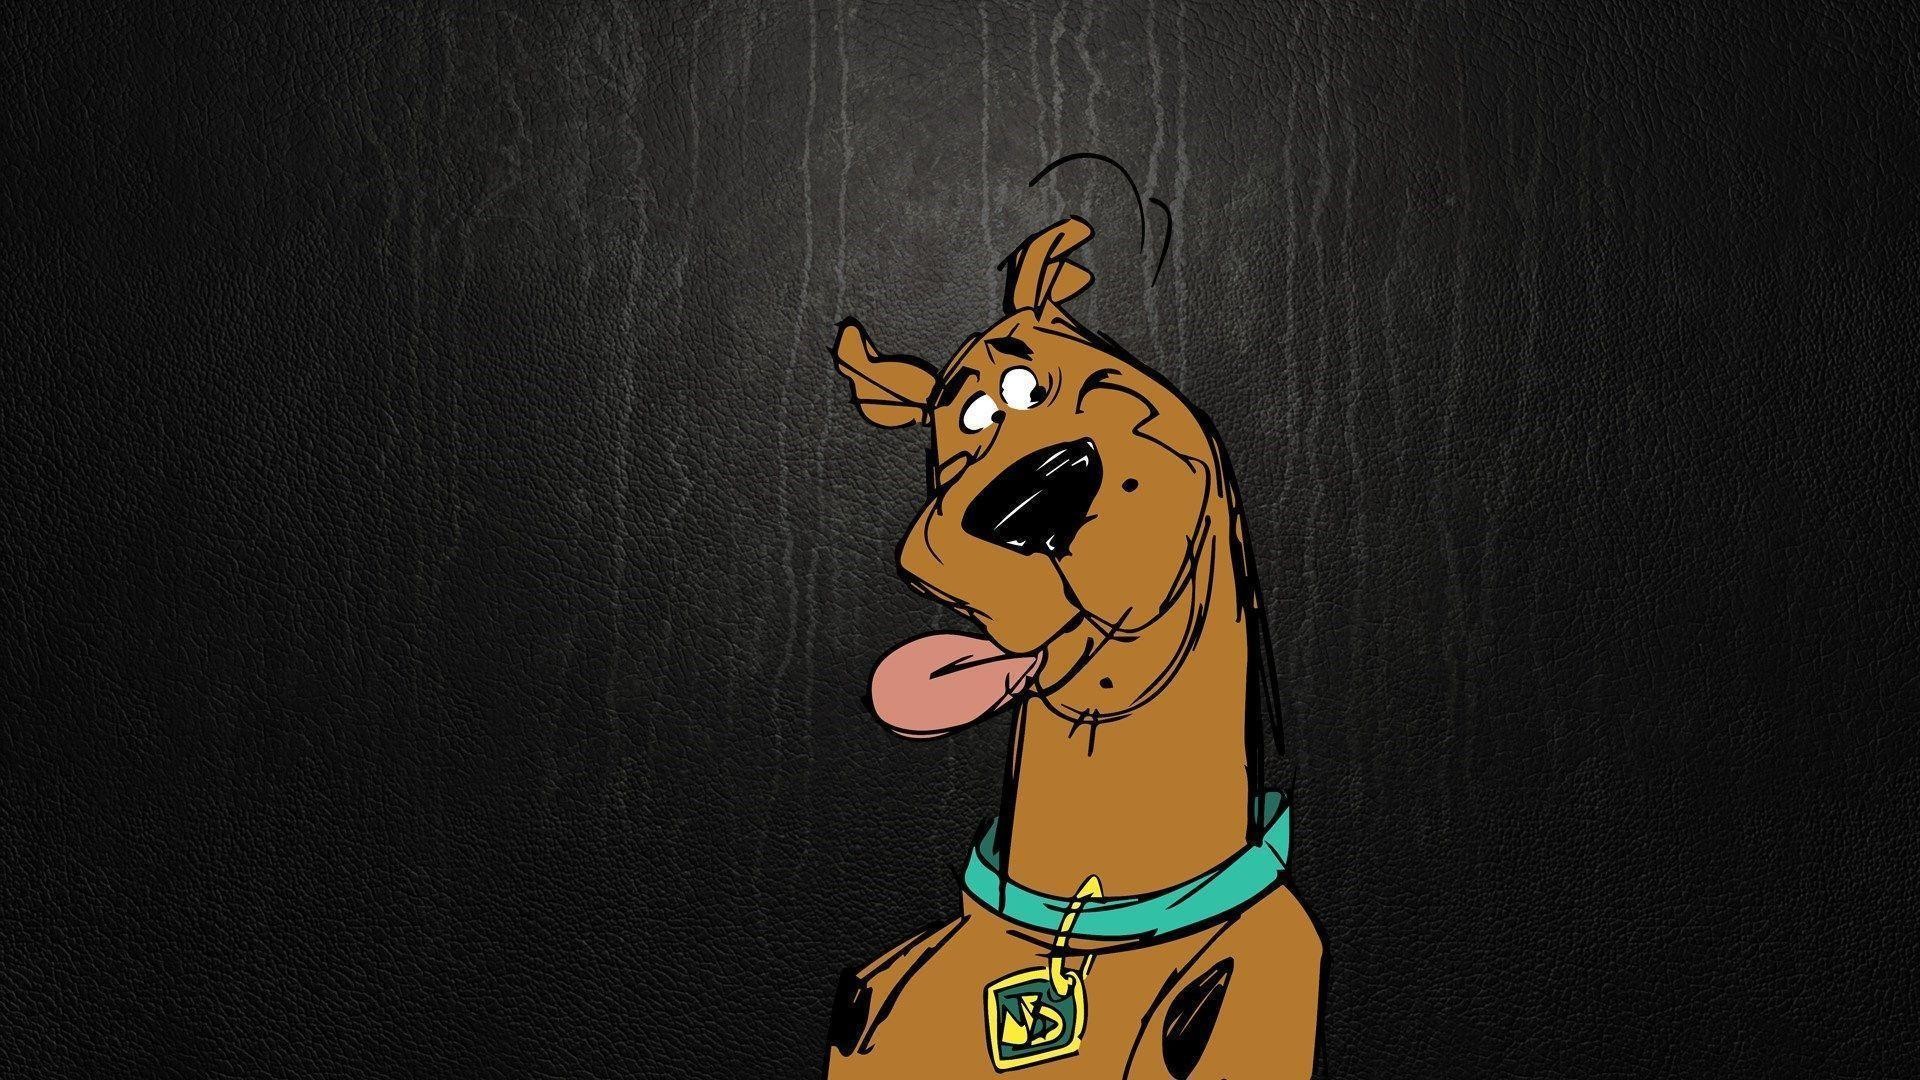 Scooby Doo Background Image